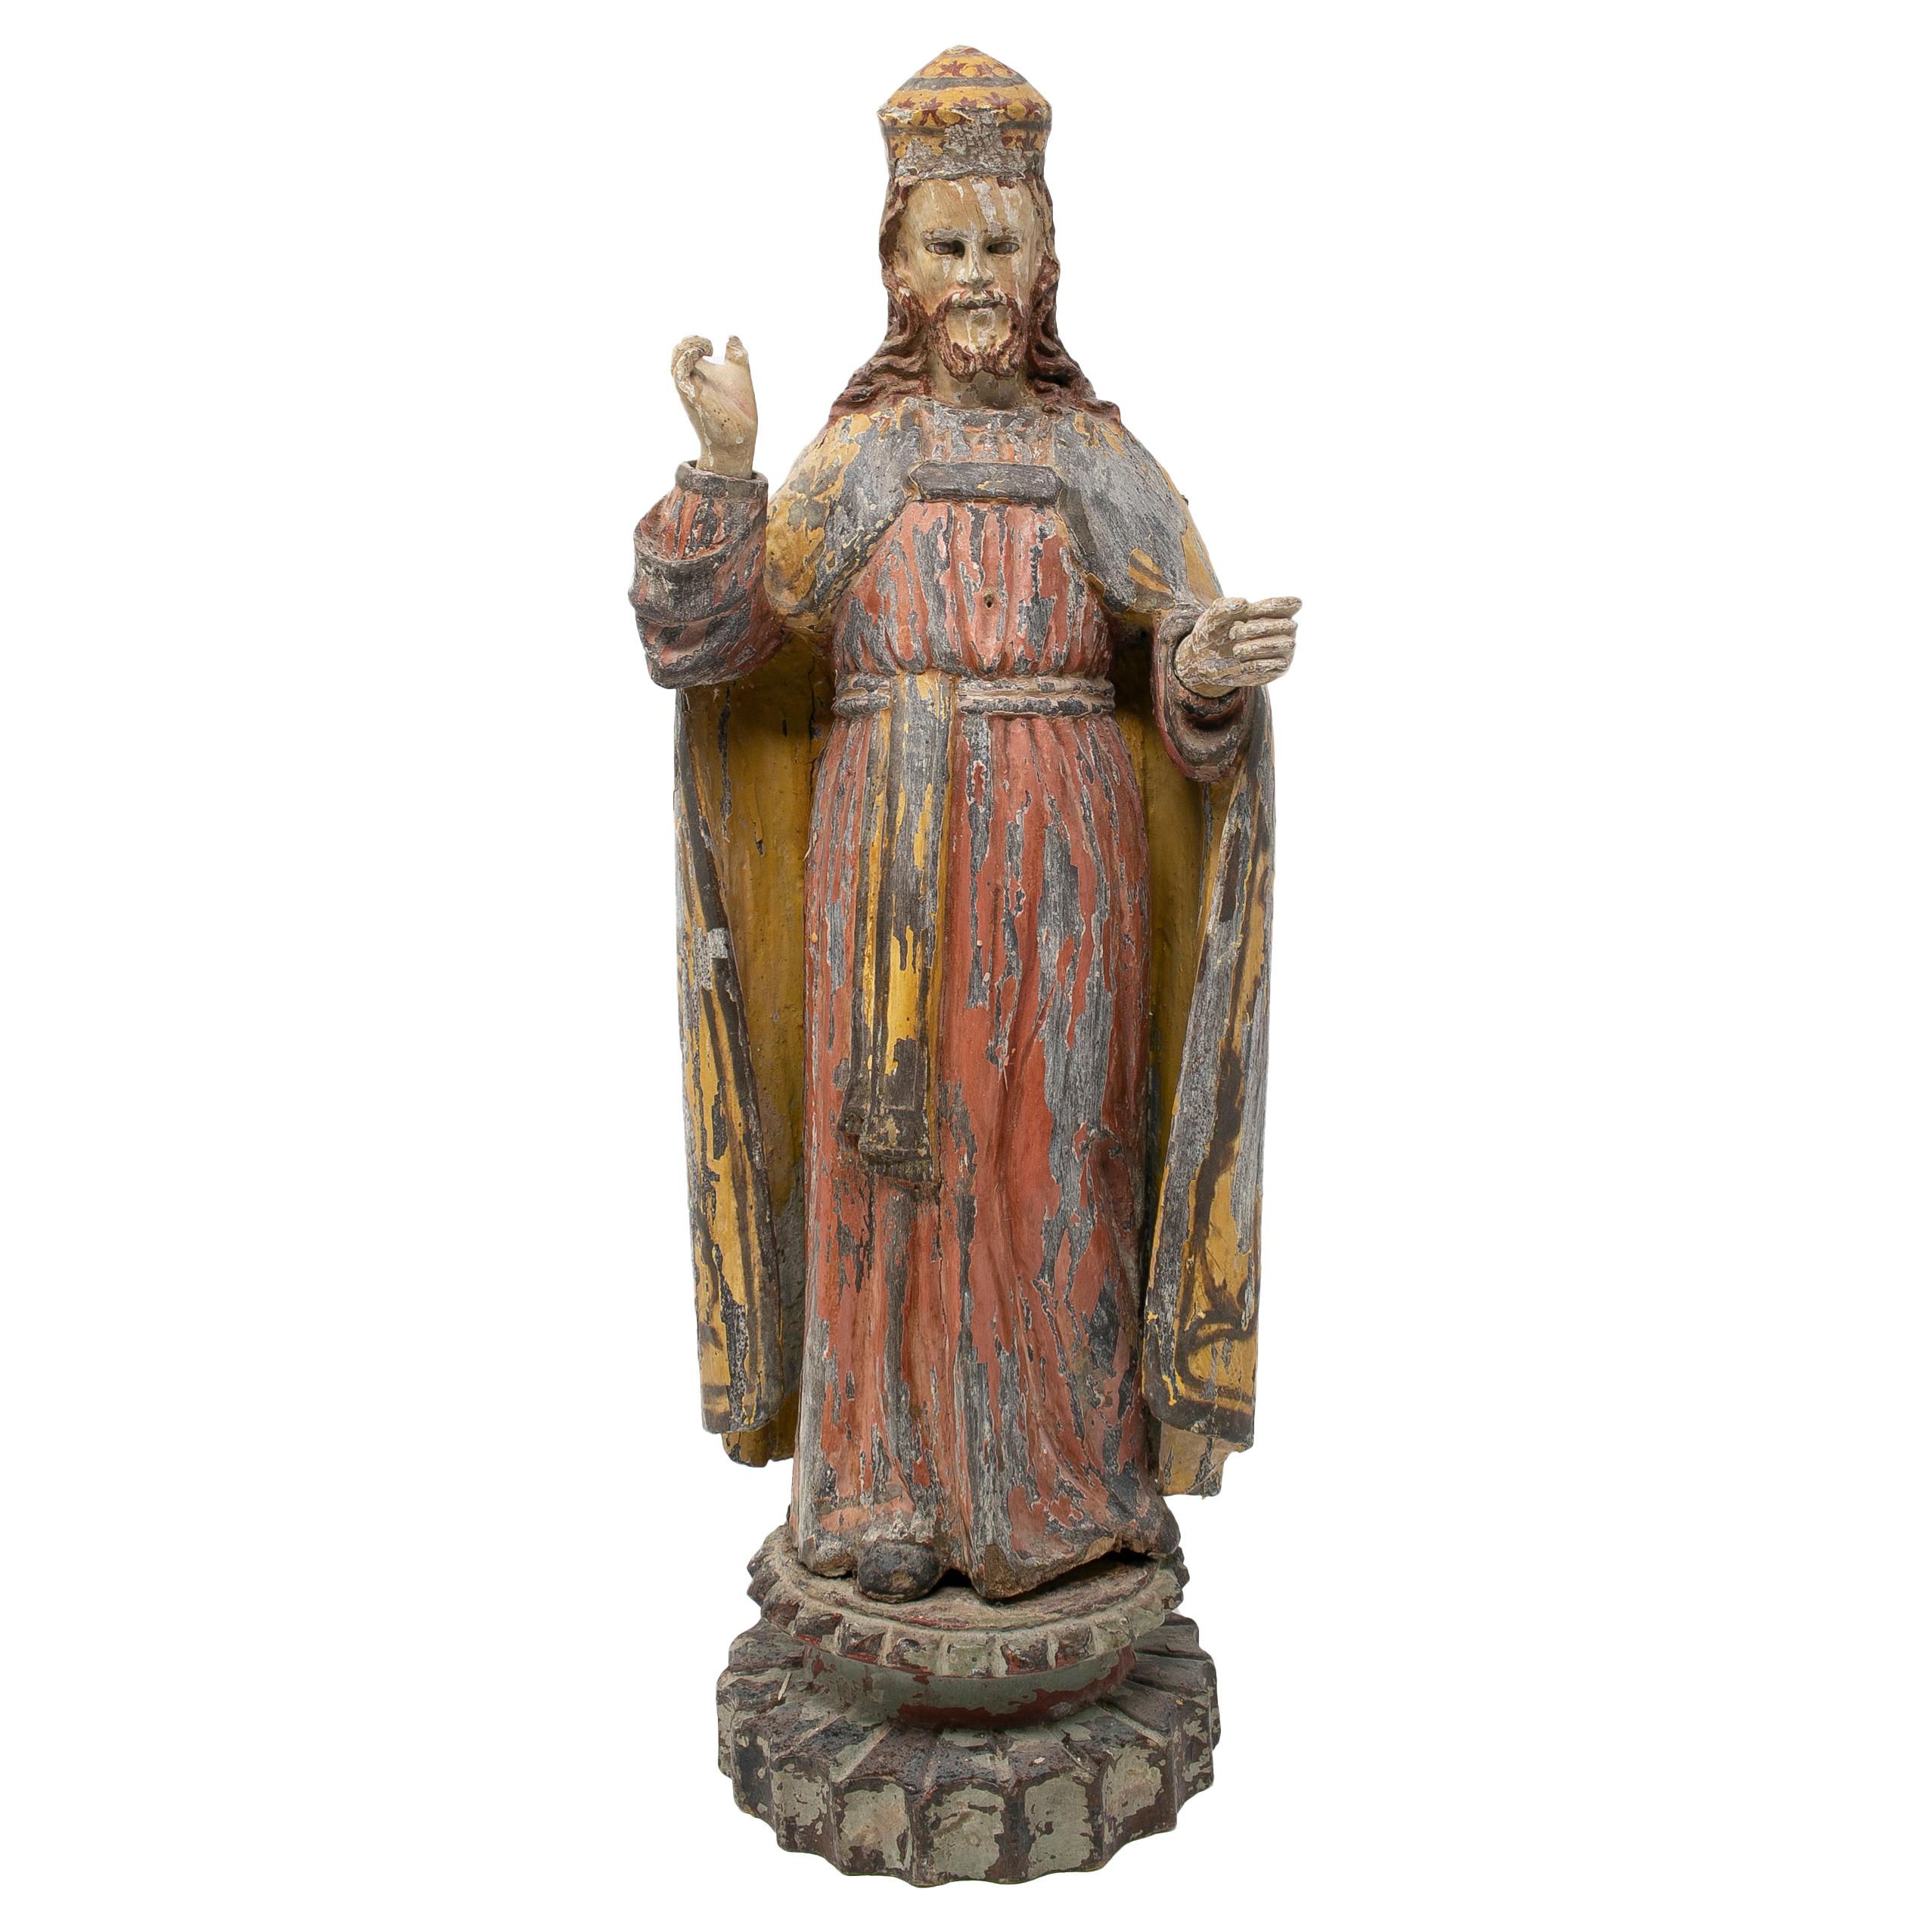 Mid-19th Century Spanish Saint Painted Wooden Figurative Sculpture